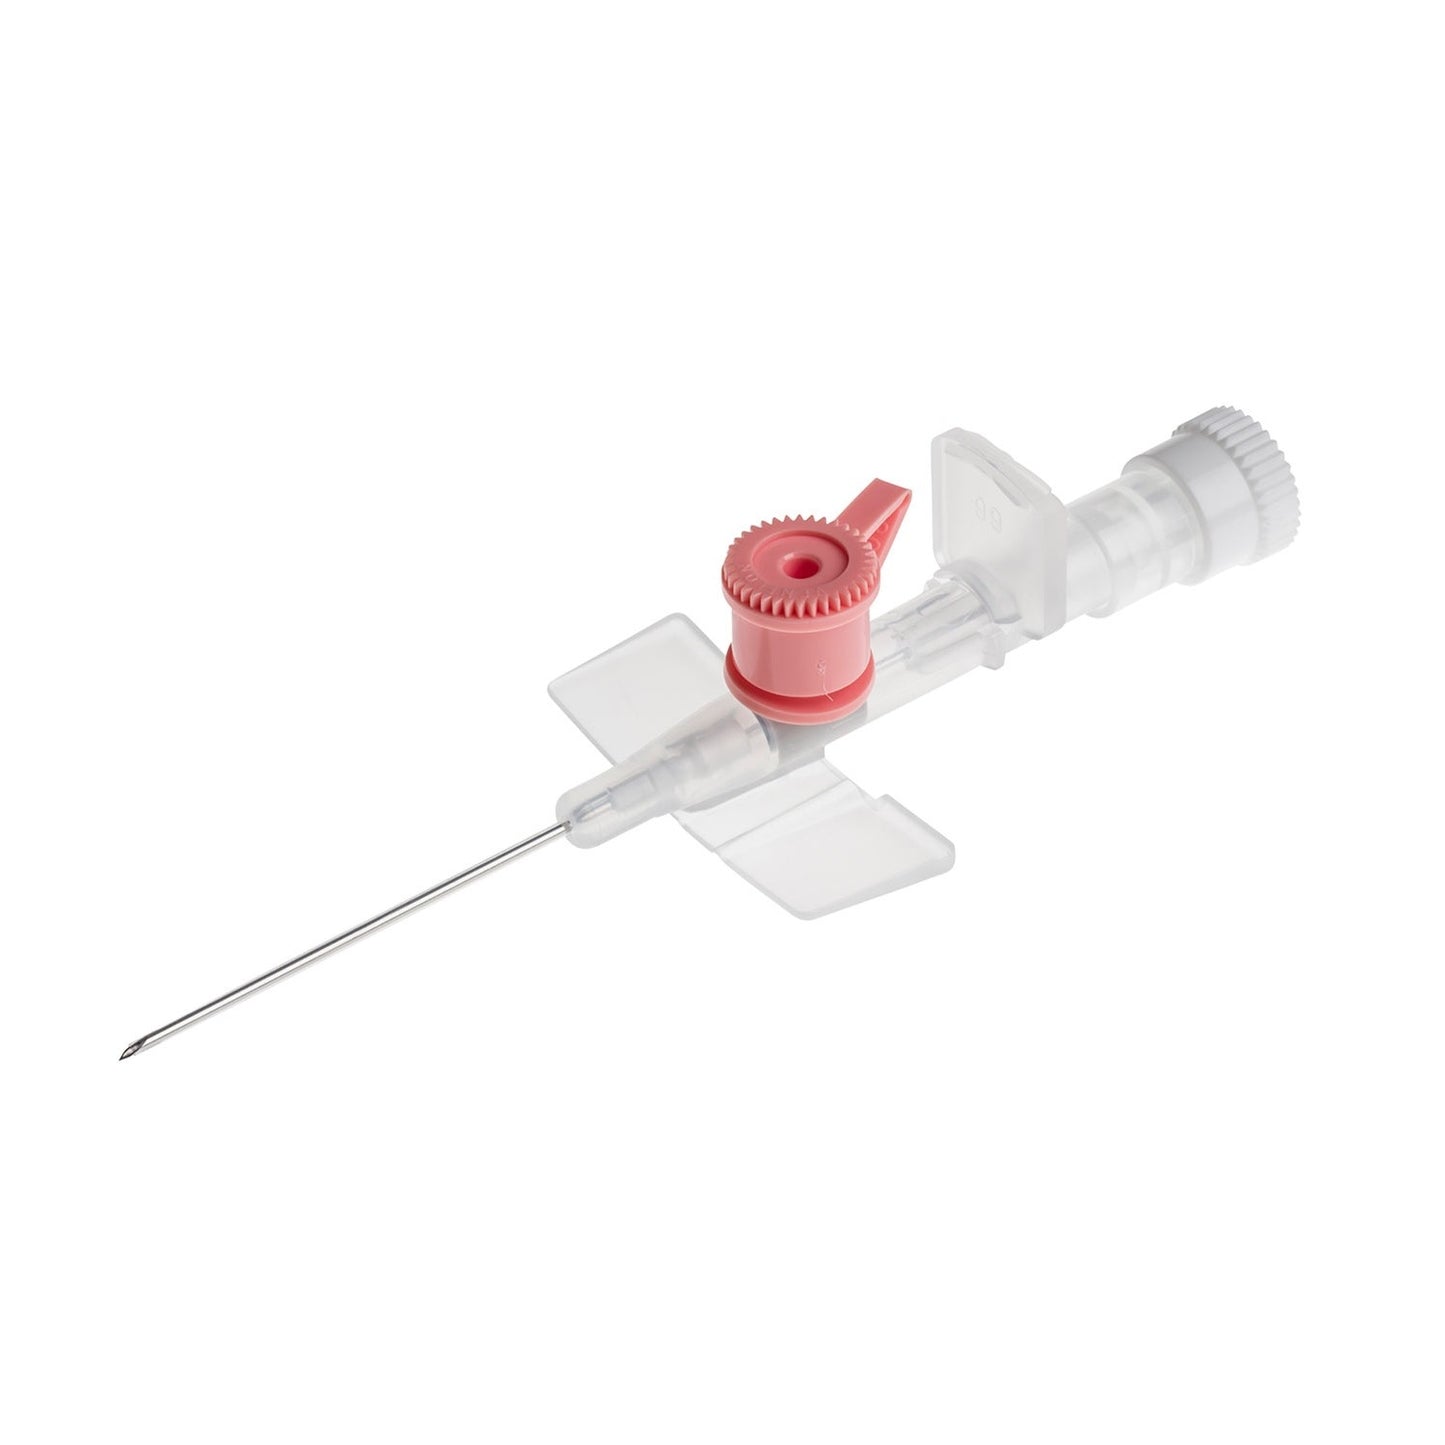 BD Venflon Peripheral IV Catheter Ported 20g, 32mm Winged - Single